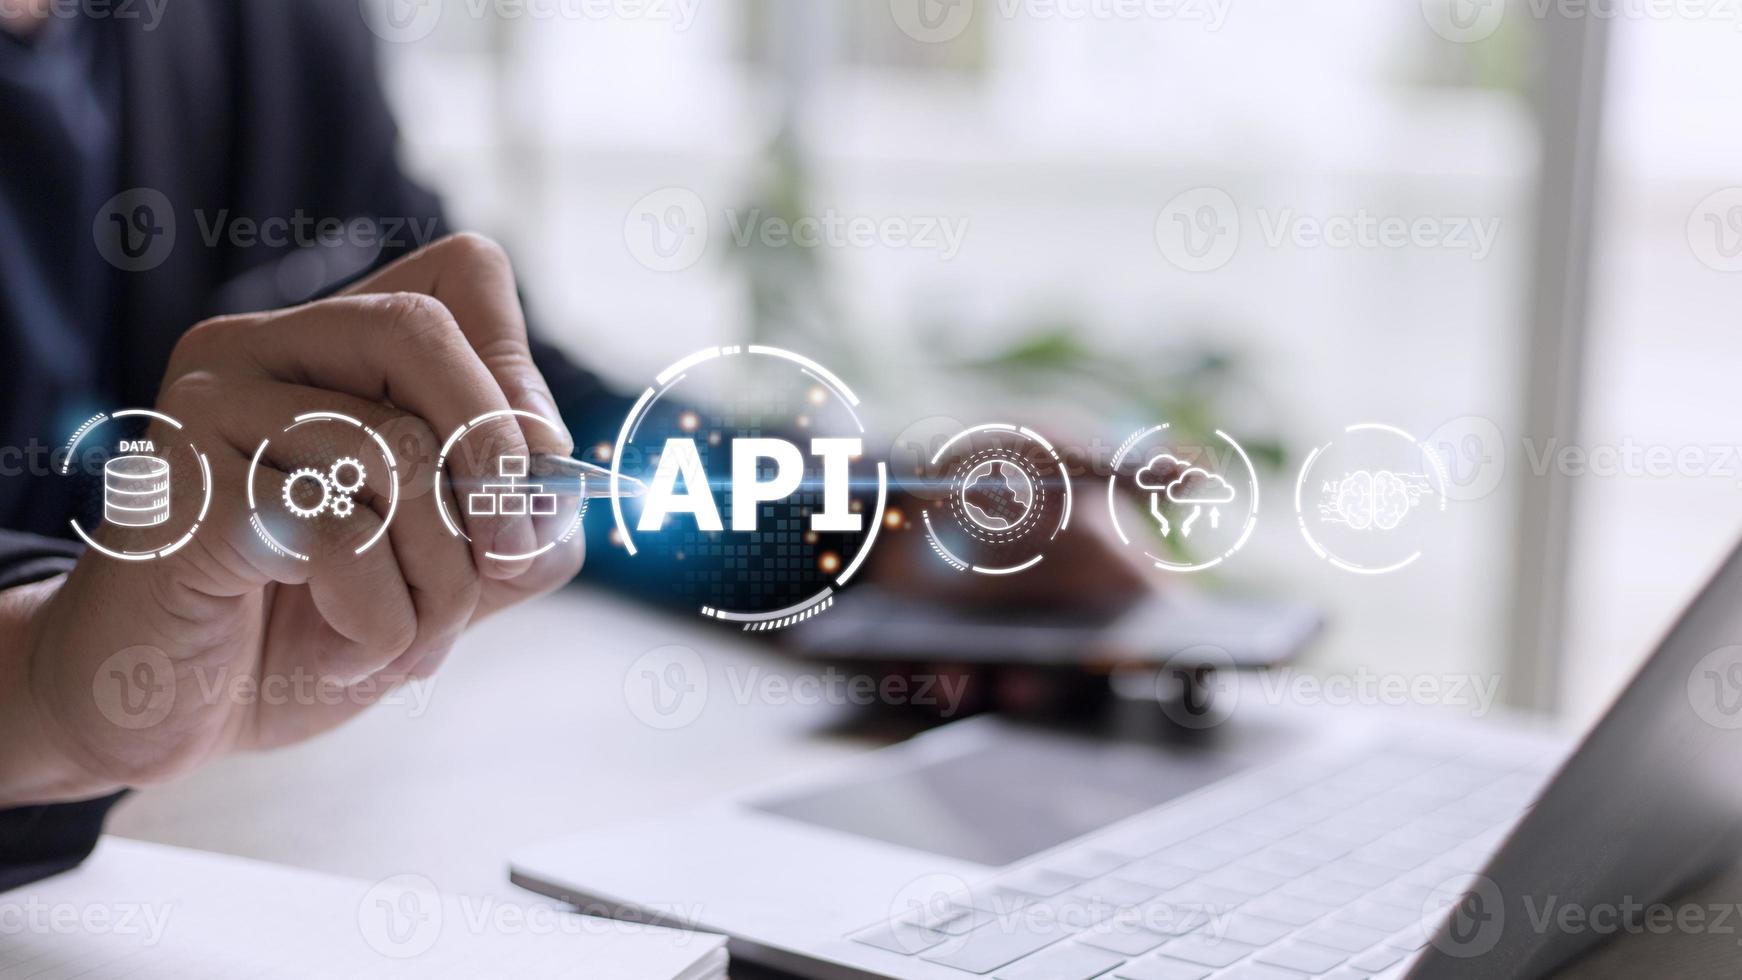 api - toepassing programmering koppel. software ontwikkeling hulpmiddel. bedrijf, modern technologie, internet en netwerken concept. foto